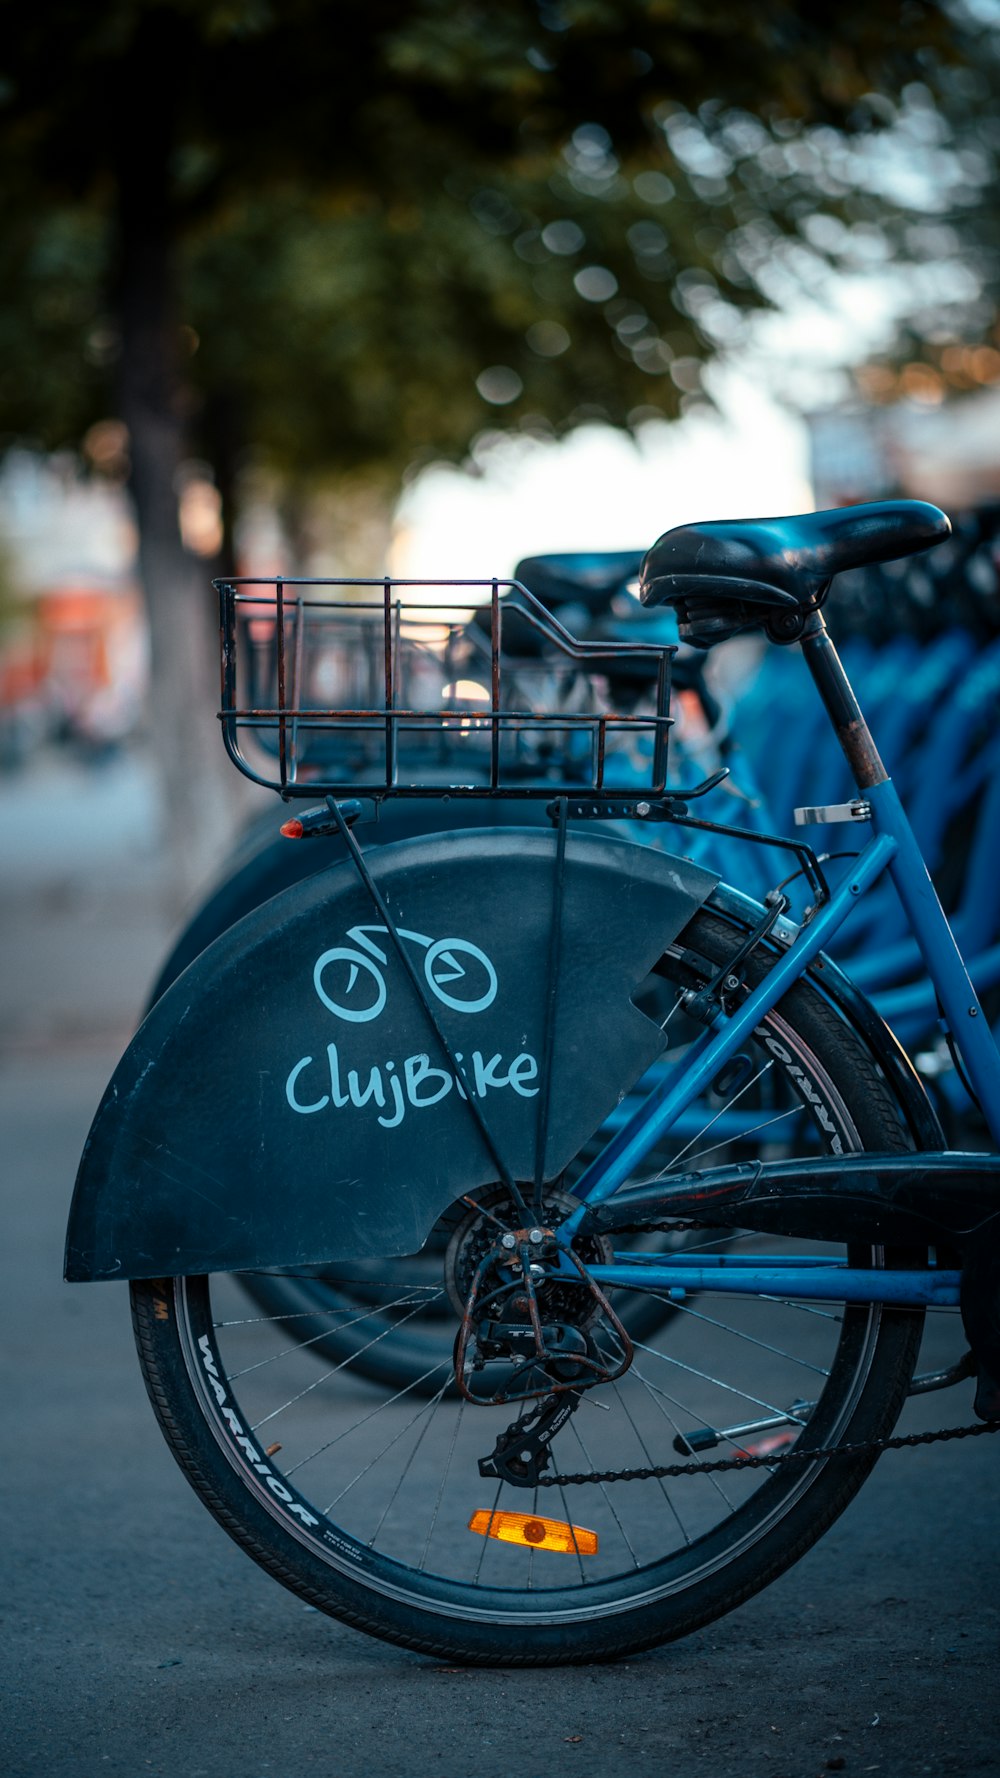 blue and black ClujBike bicycle